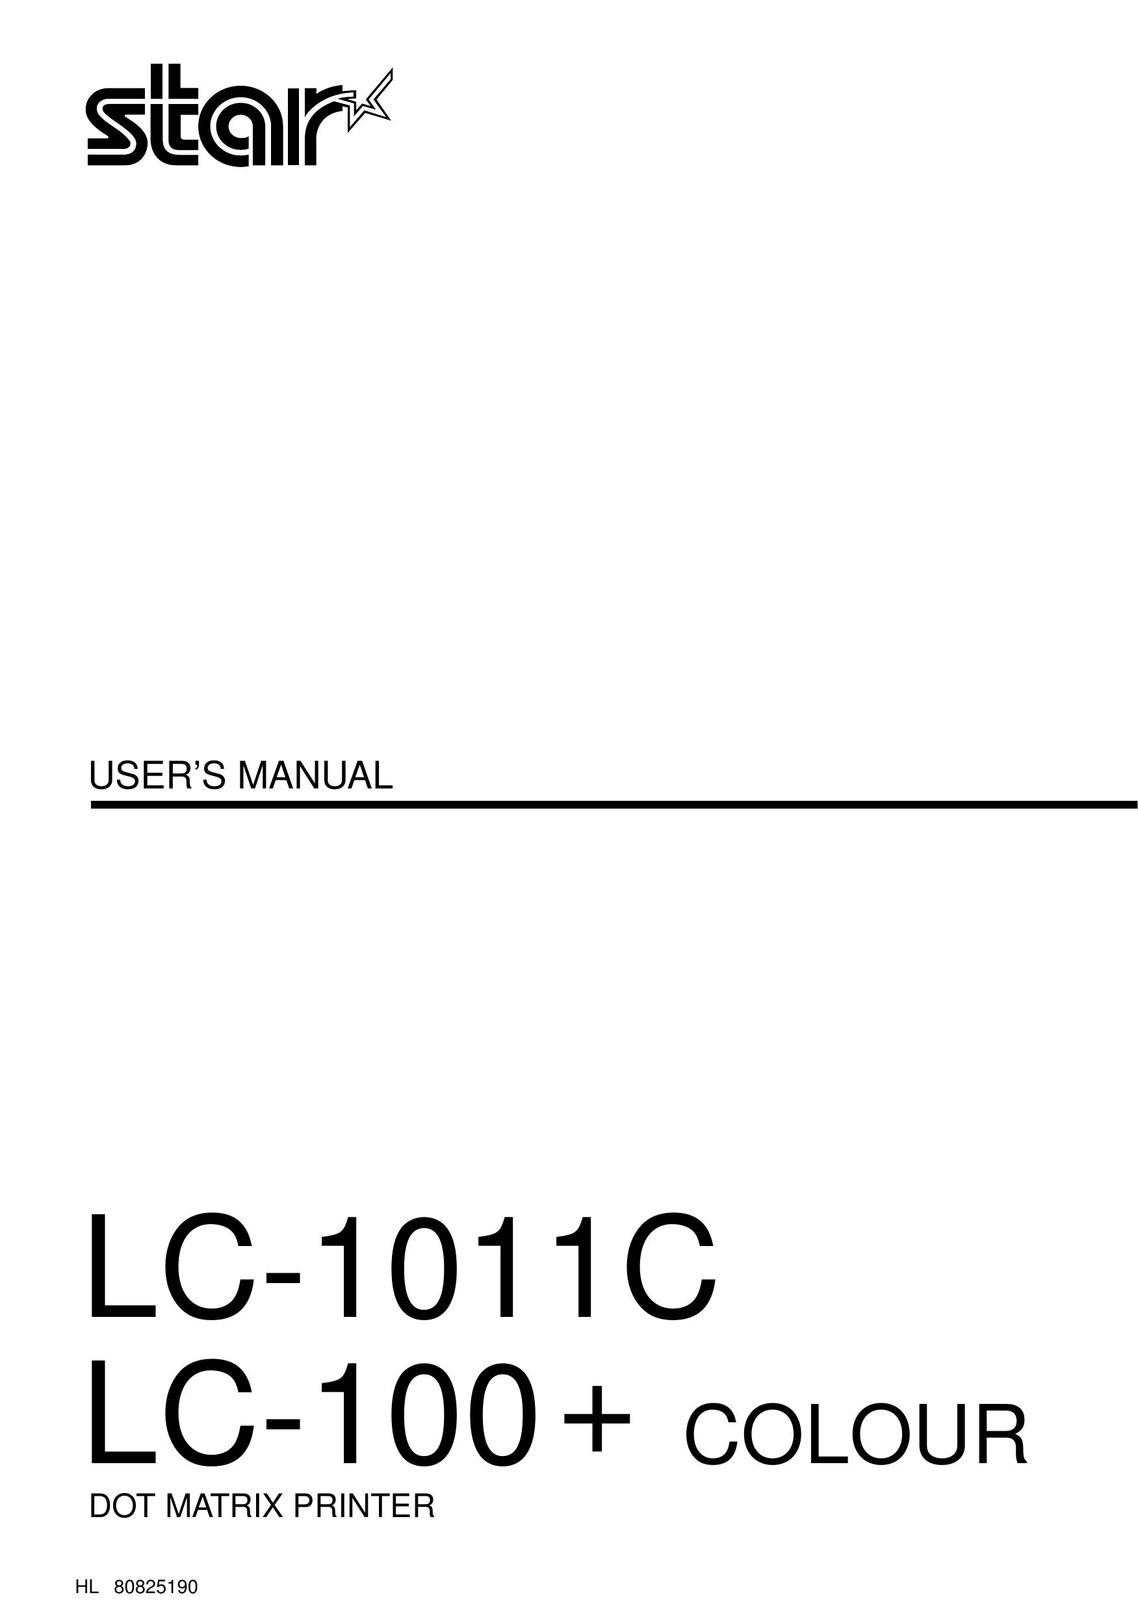 Star Micronics LC-1011C Printer User Manual